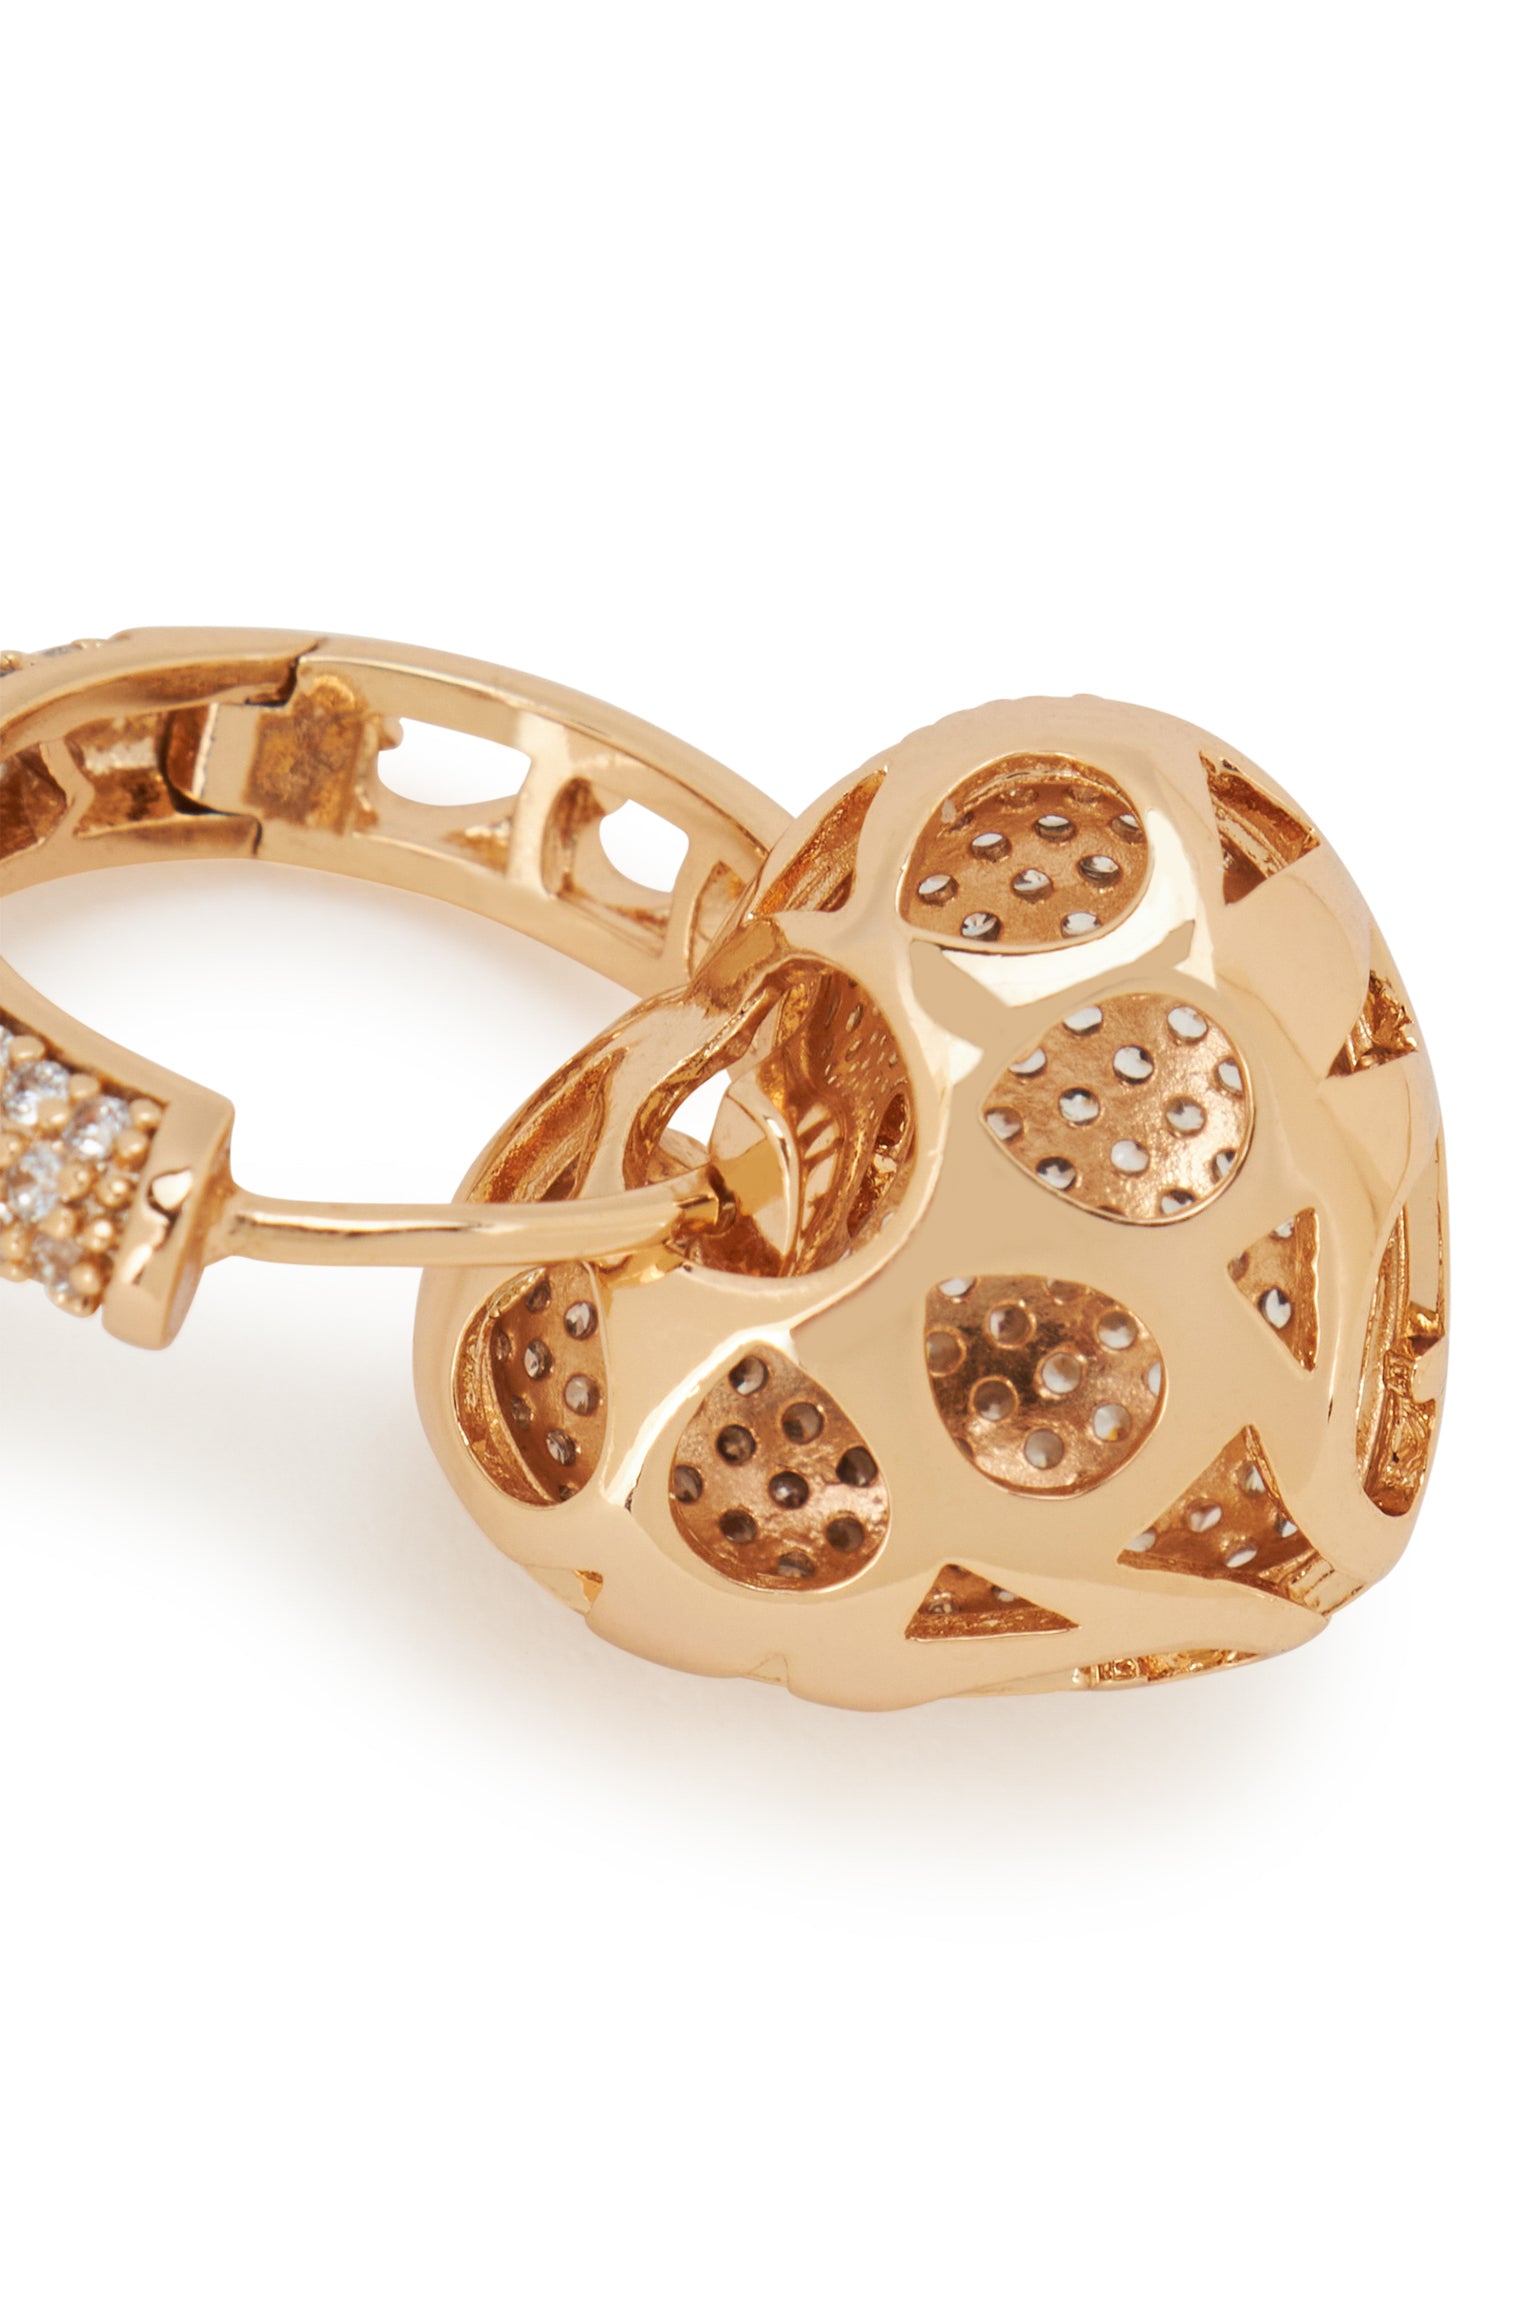 MELUSINA BIJOUX Pendant Earrings with Gold Heart